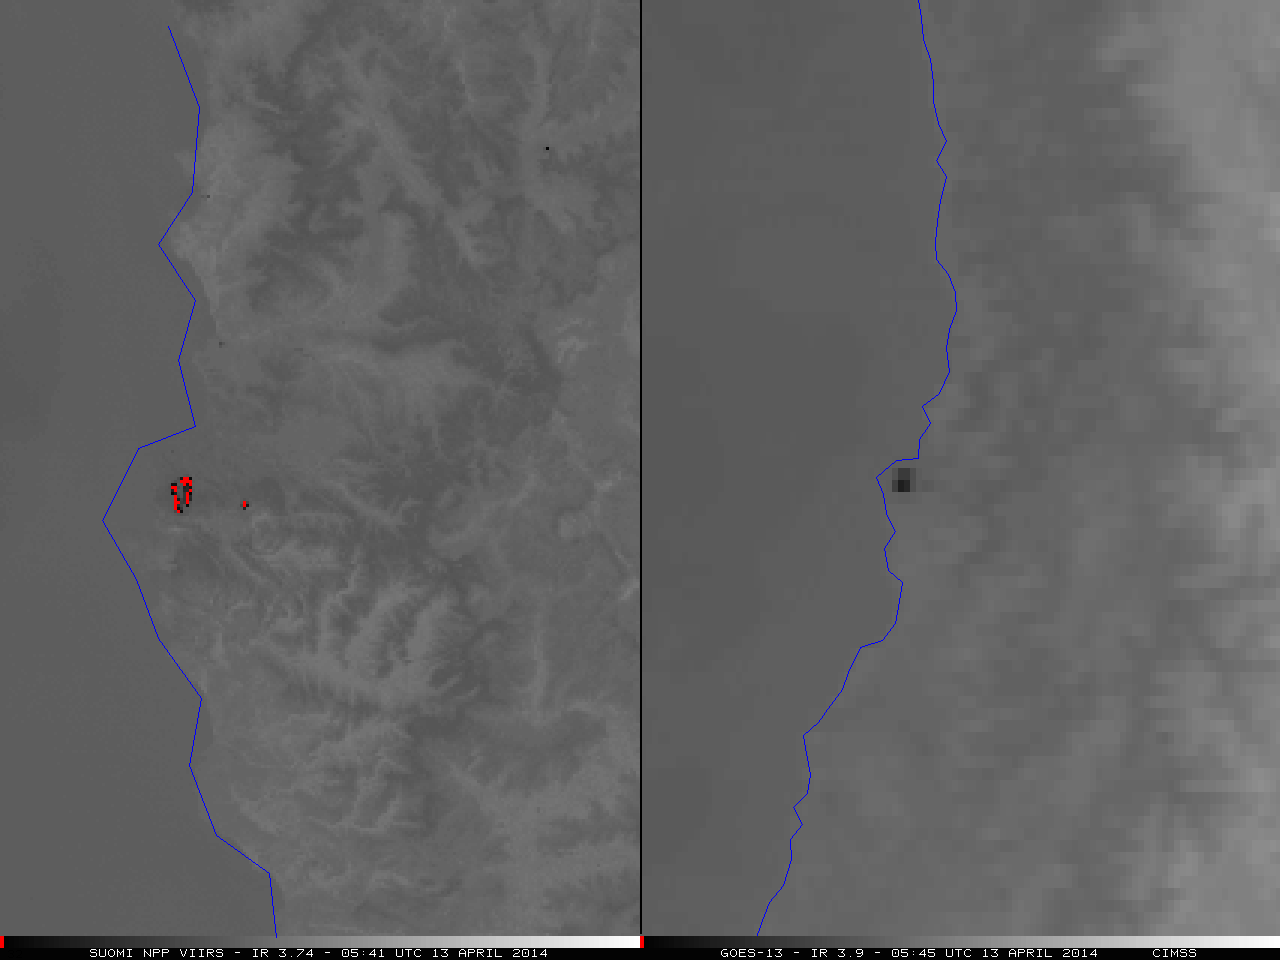 Suomi NPP VIIRS 3.74 Âµm shortwave IR channel image (left) and GOES-13 3.9 Âµm shortwave IR channel image (right)